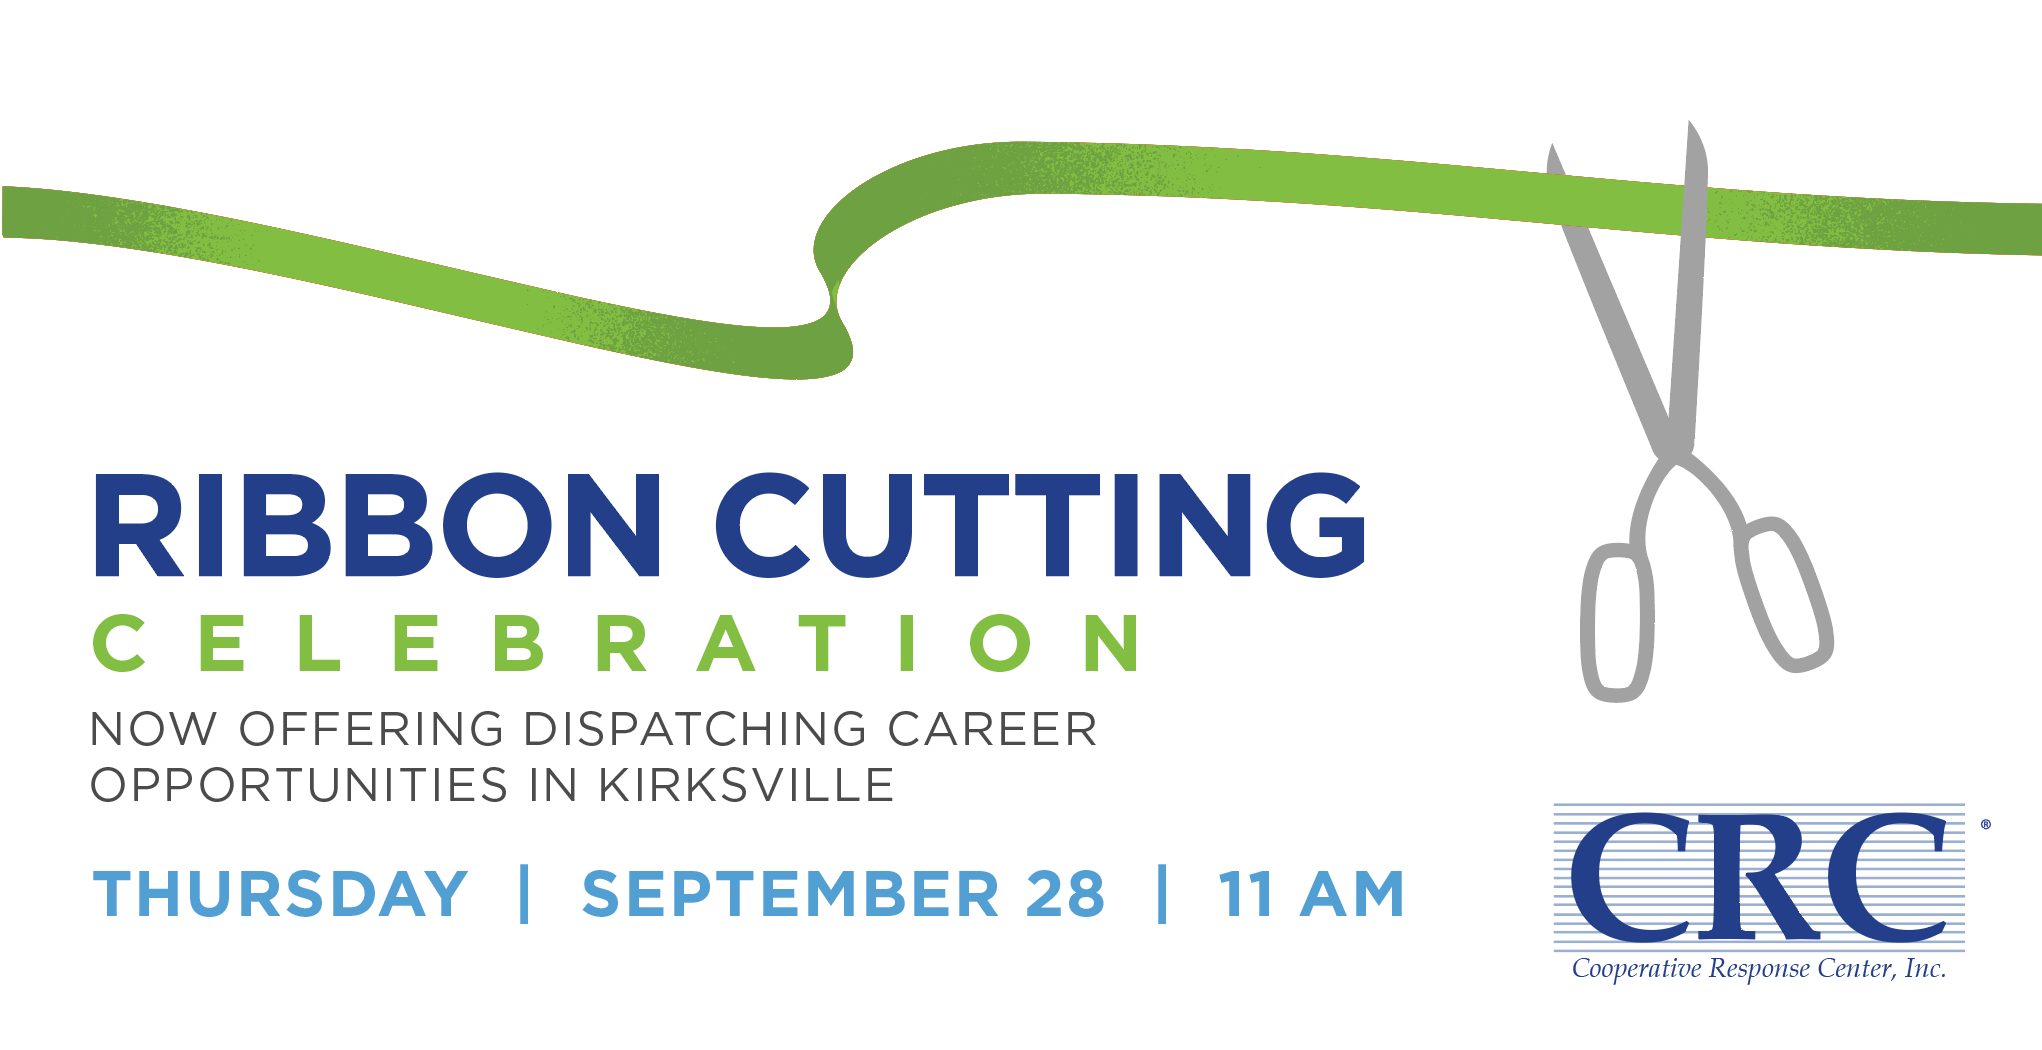 Ribbon Cutting Celebration on September 28 at 11 a.m.